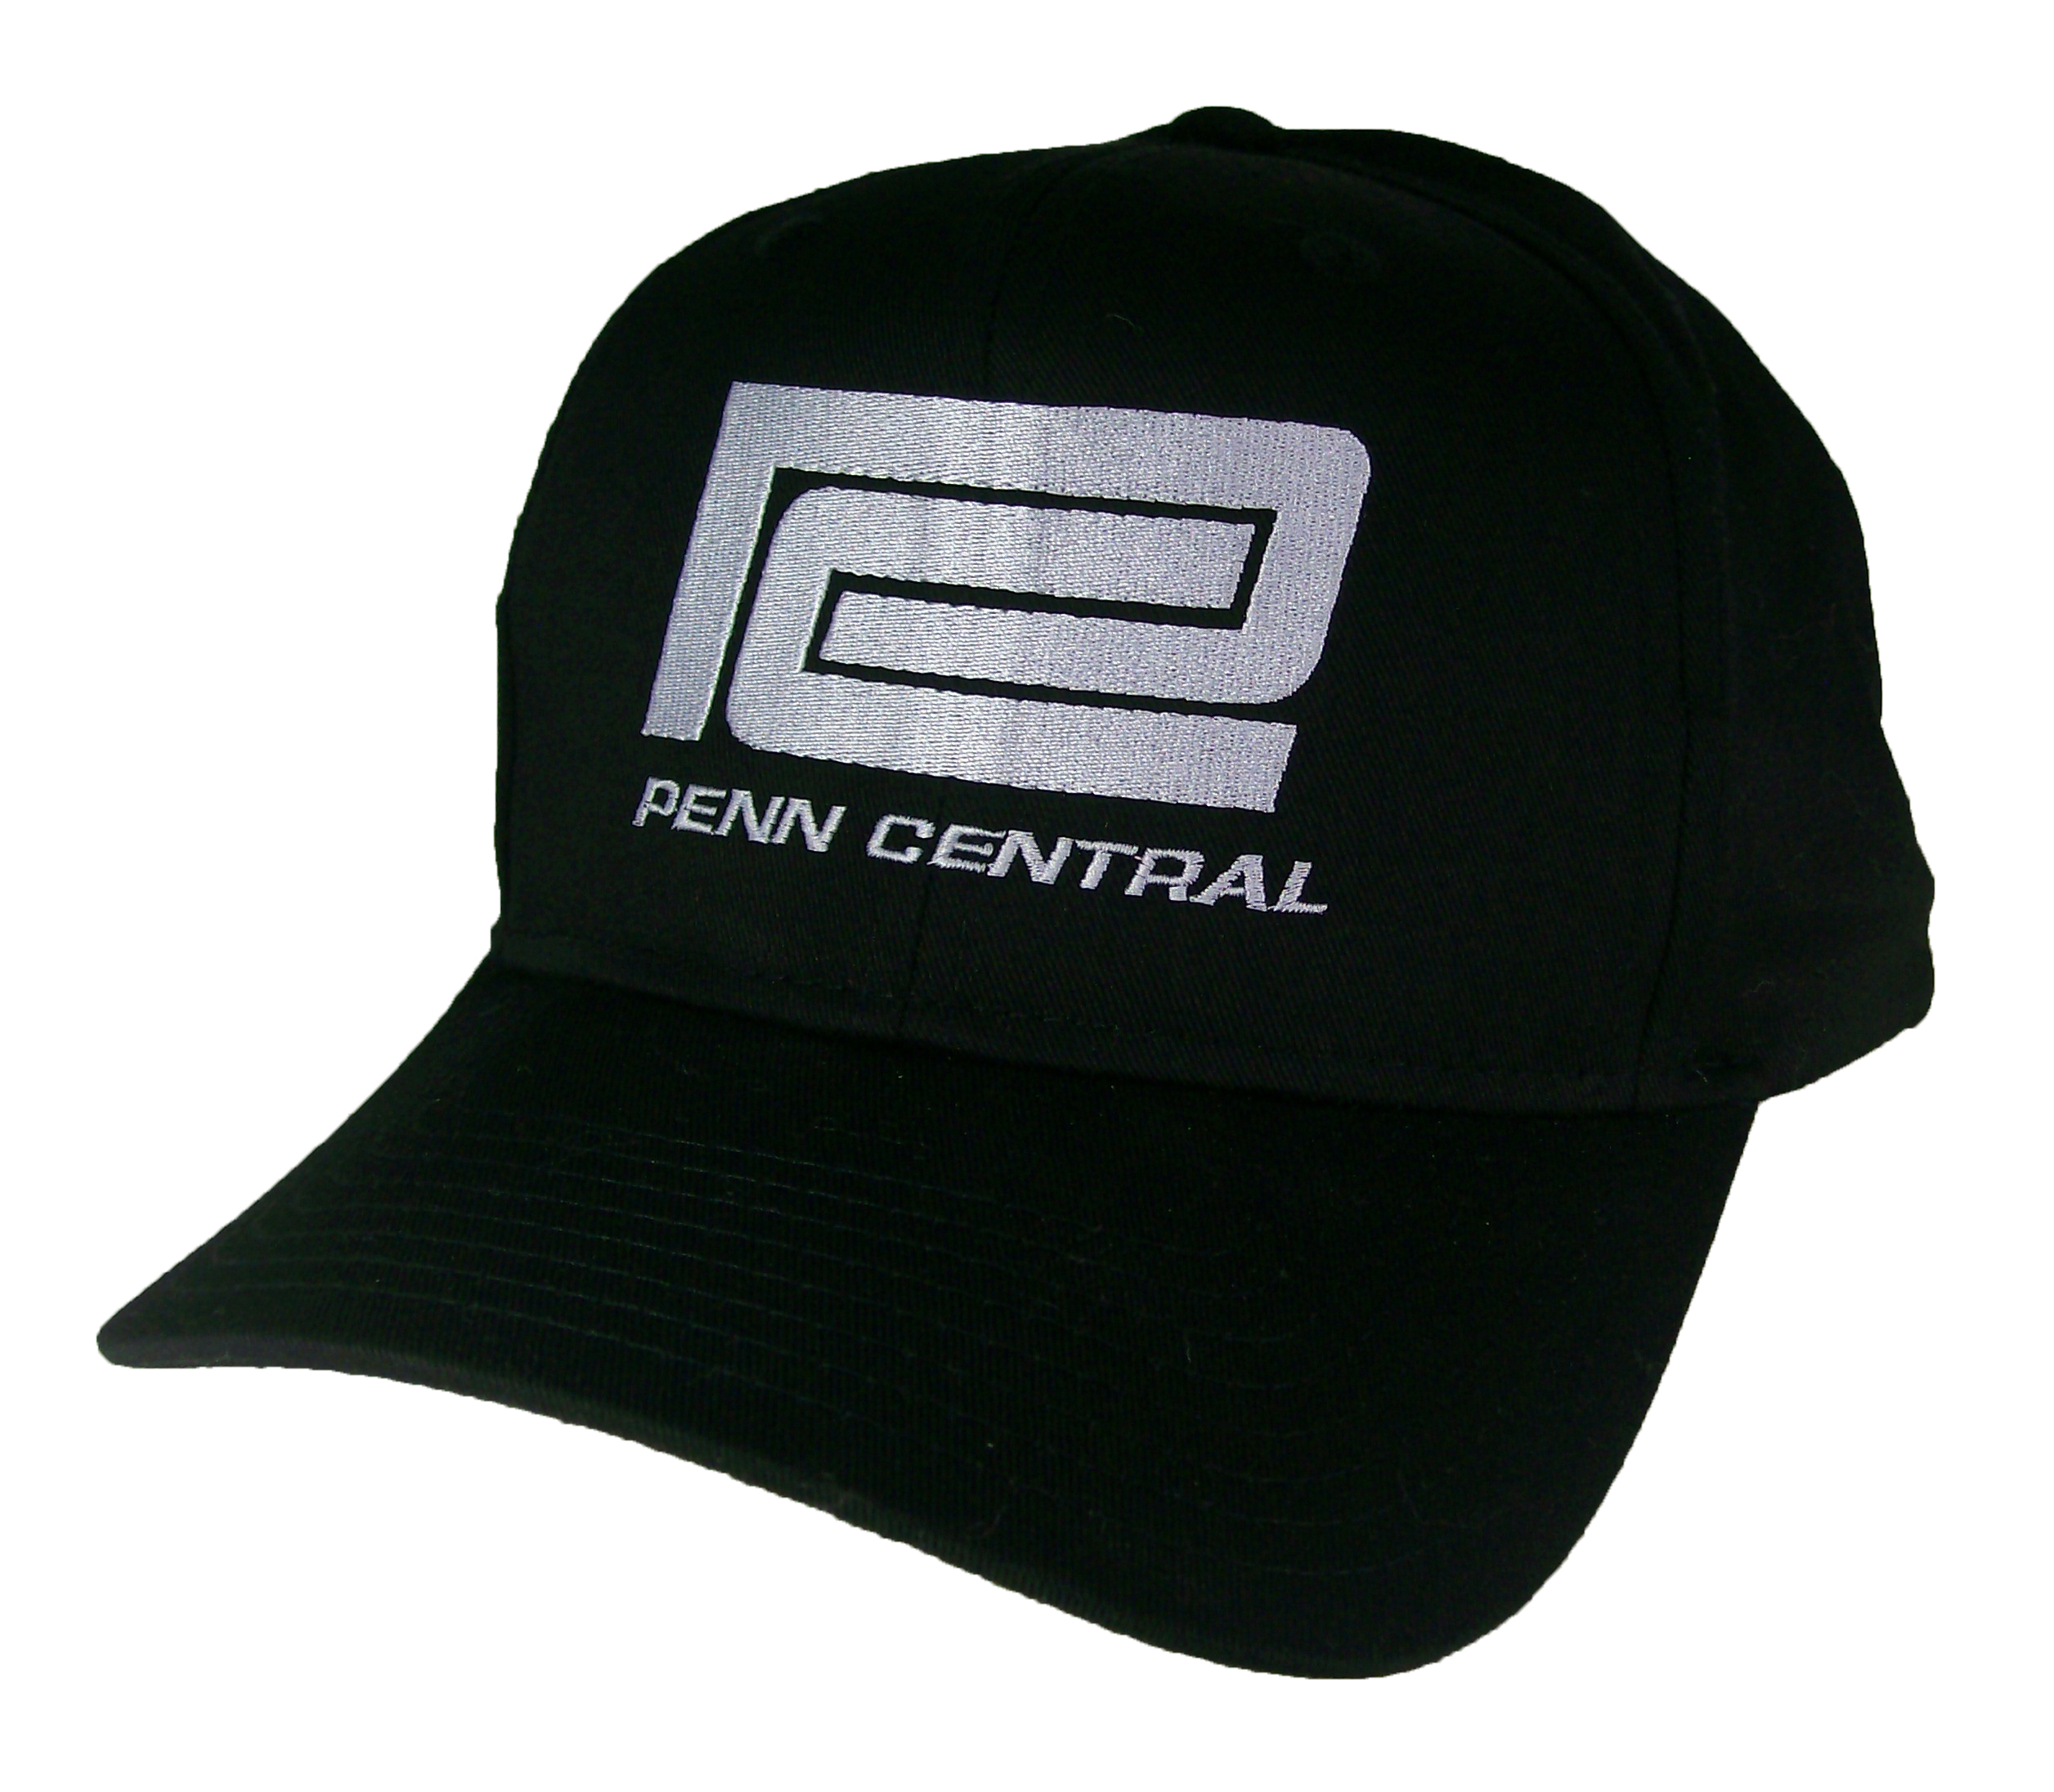 Penn Central Embroidered Cap – Mohawk Design